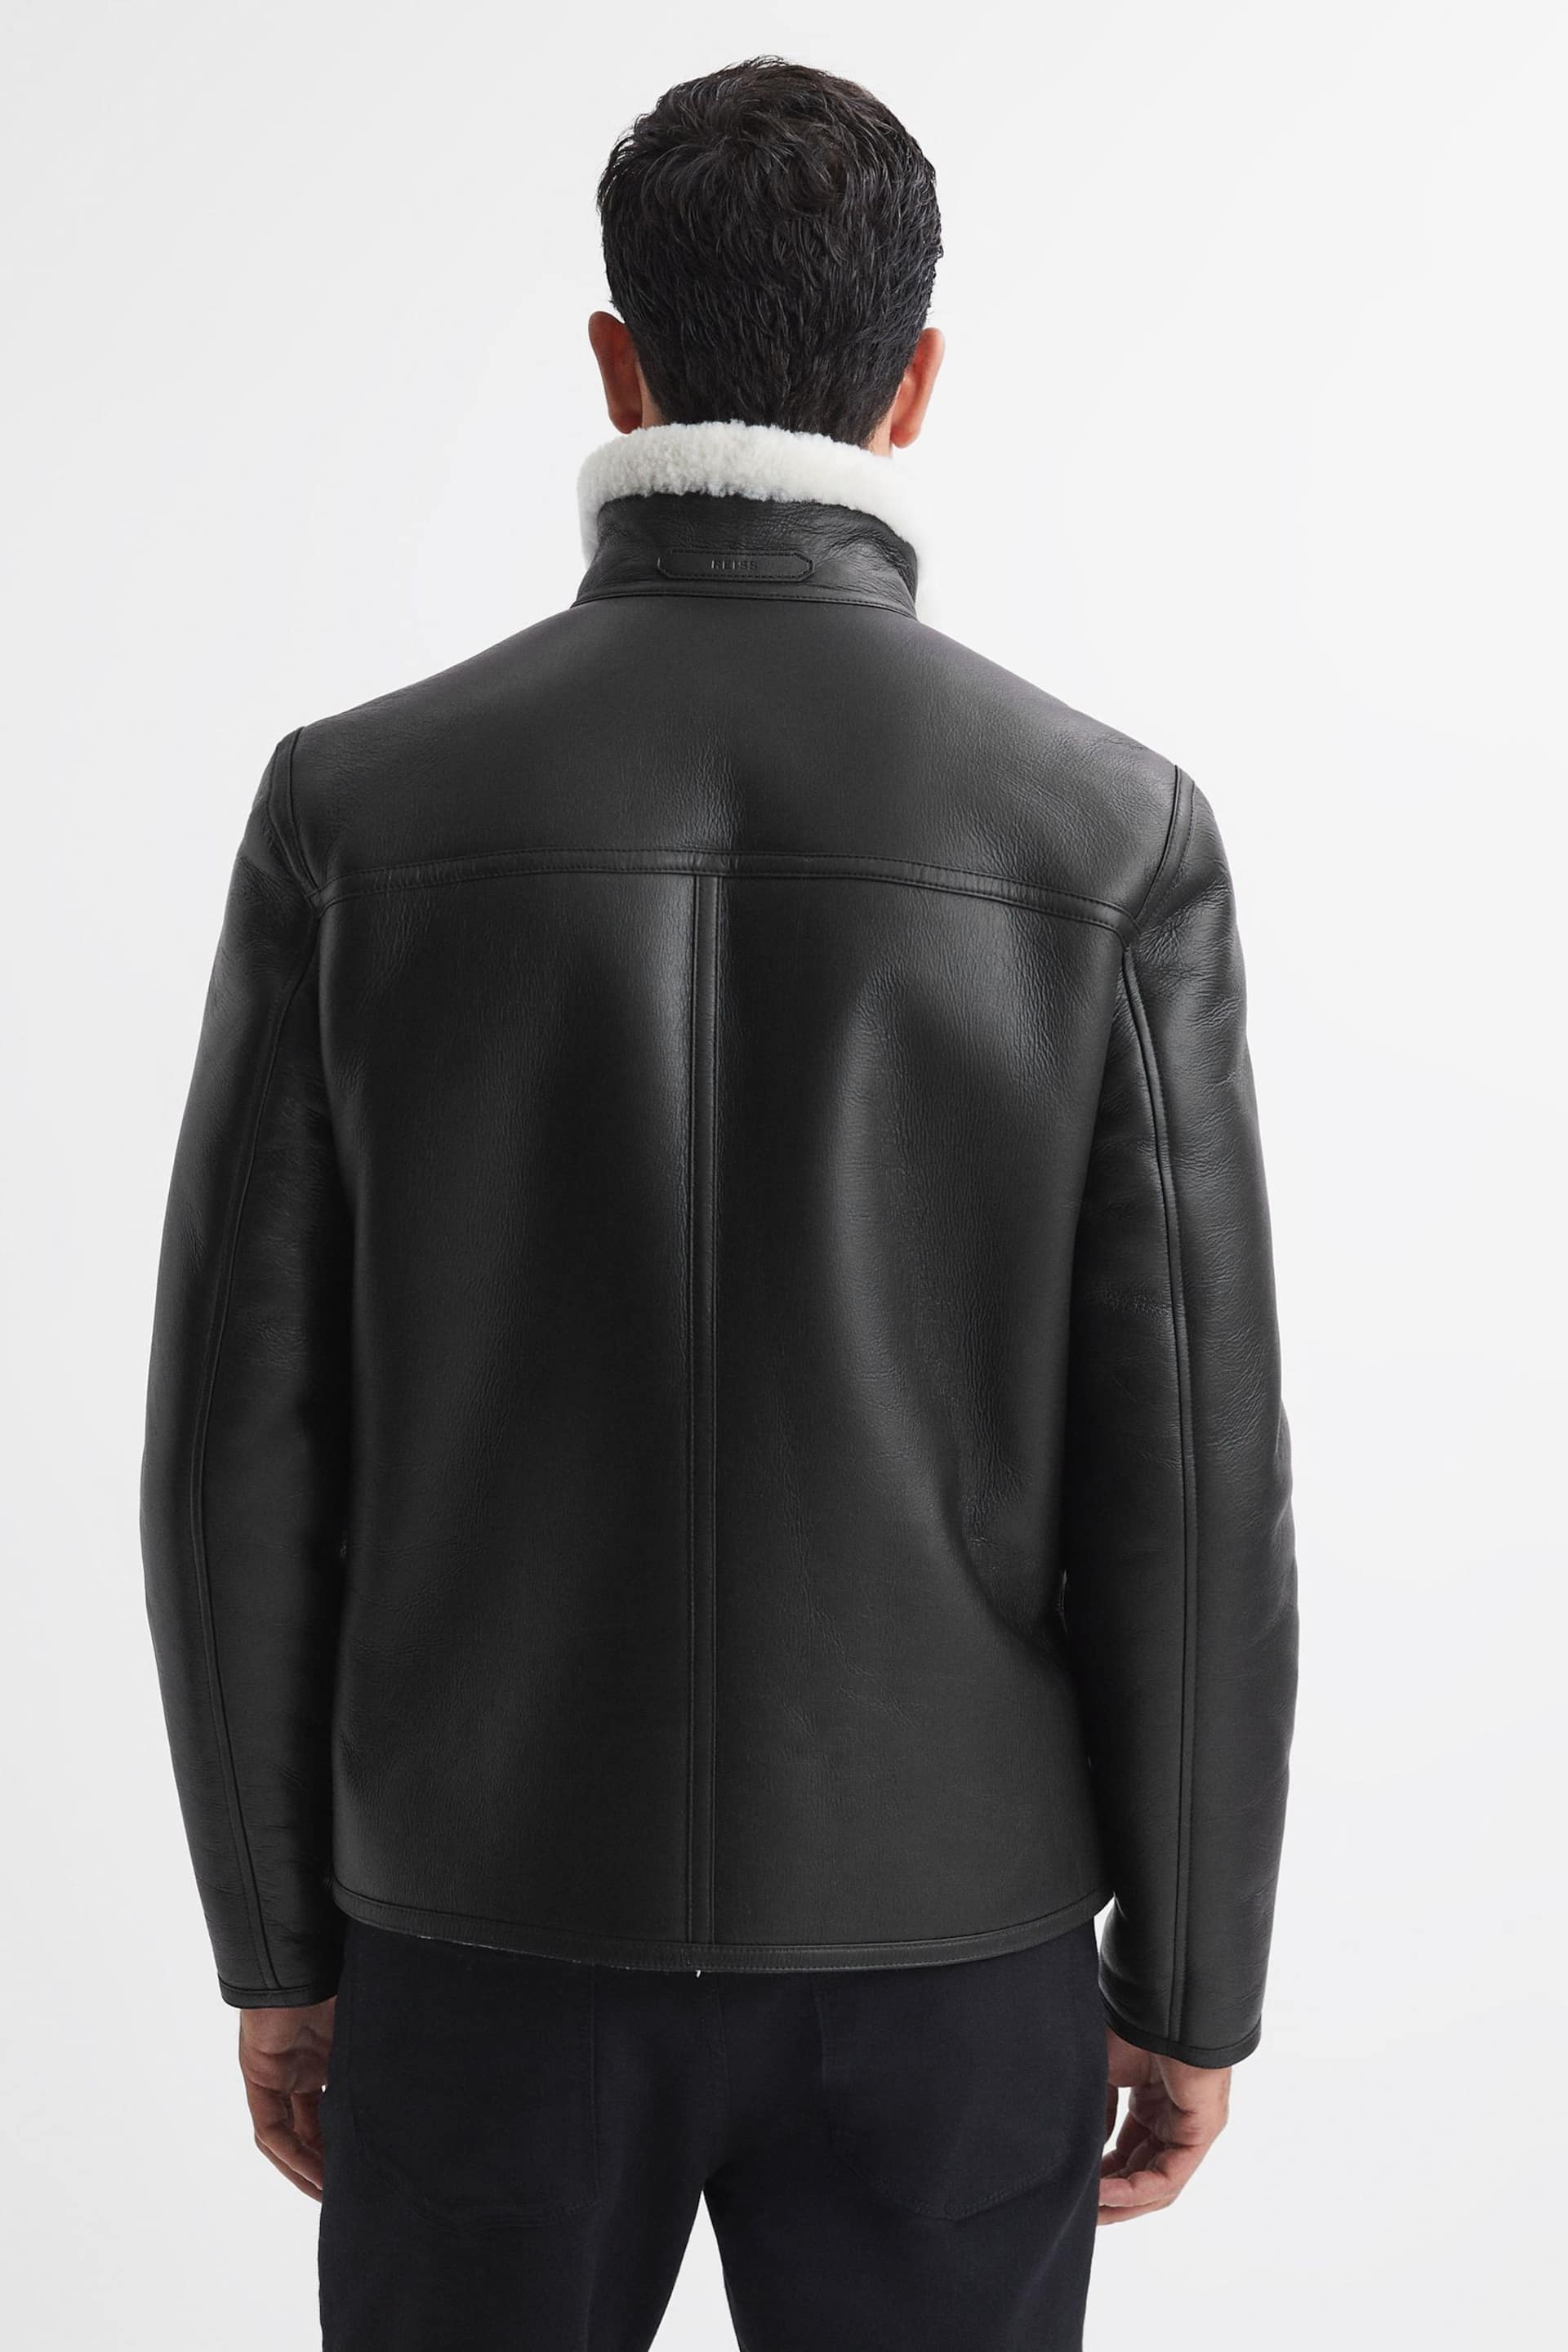 Reiss Black Brankos Leather Sheepskin Jacket - Image 6 of 6